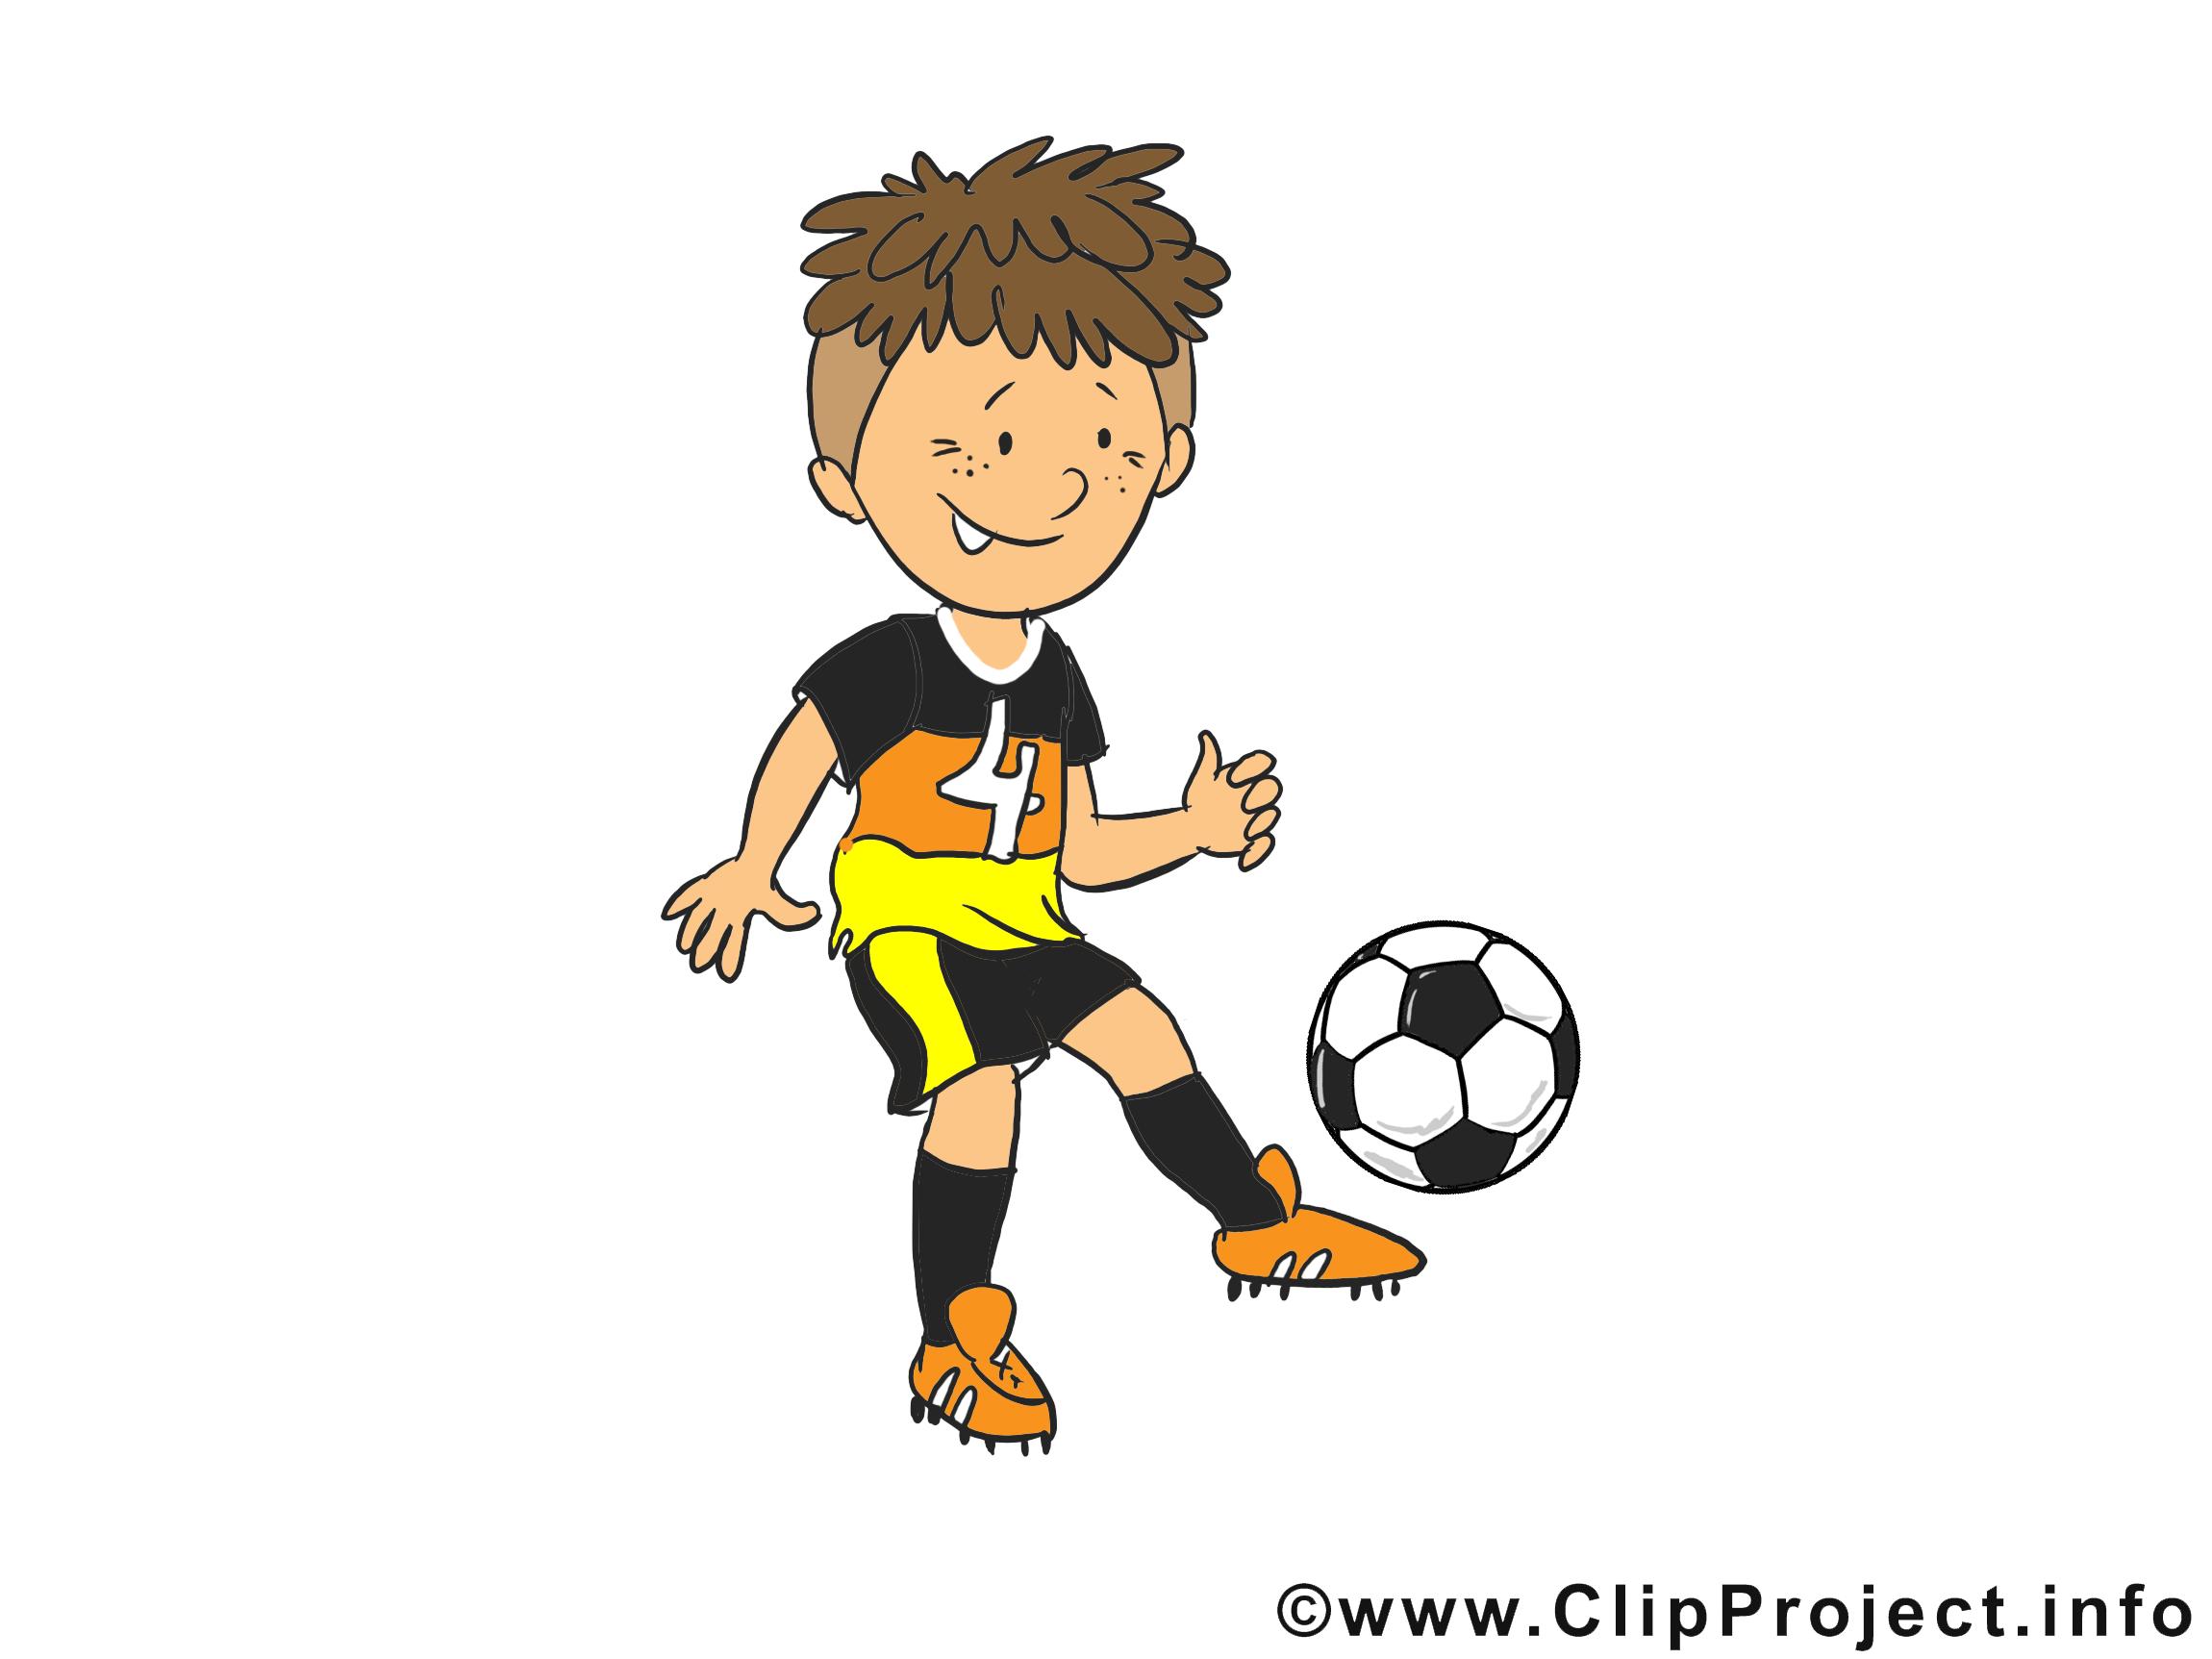 Garçon illustration - Football images